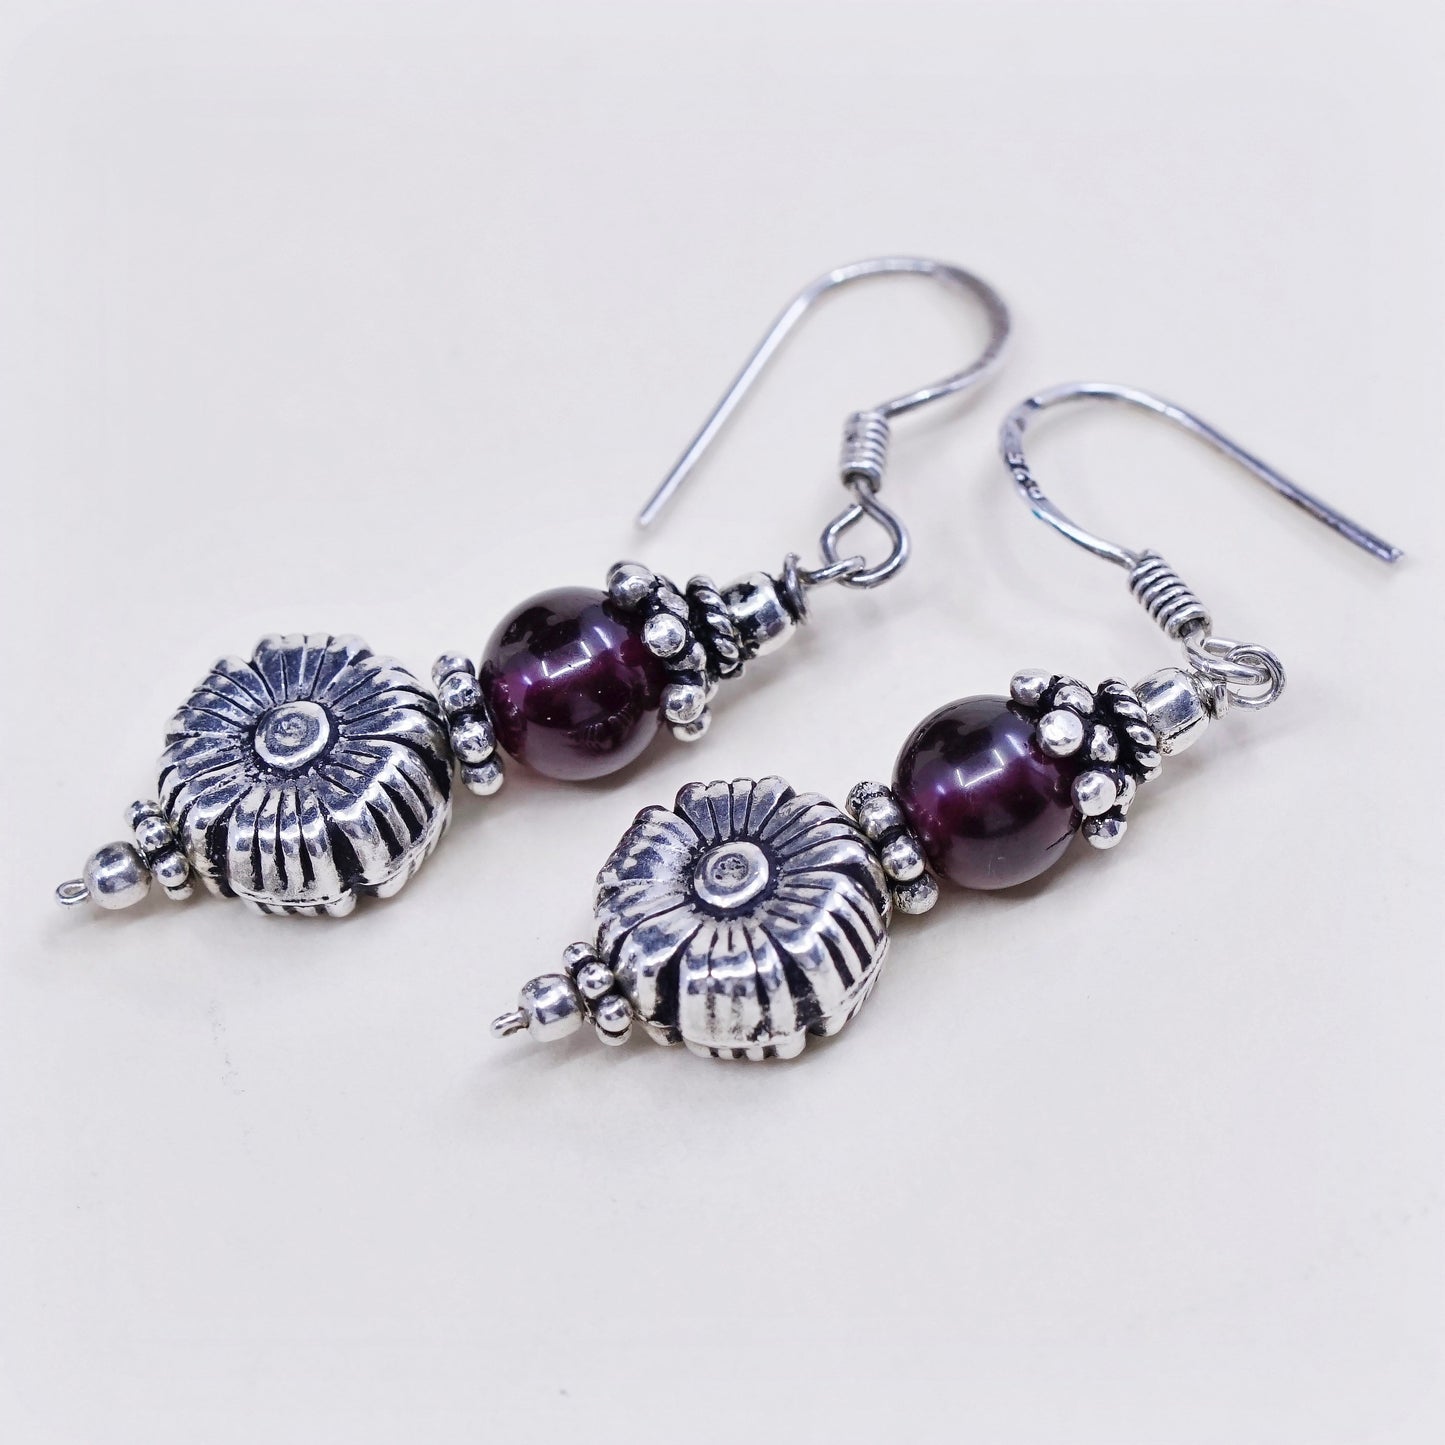 Vintage sterling silver flower earrings, 925 silver with garnet beads